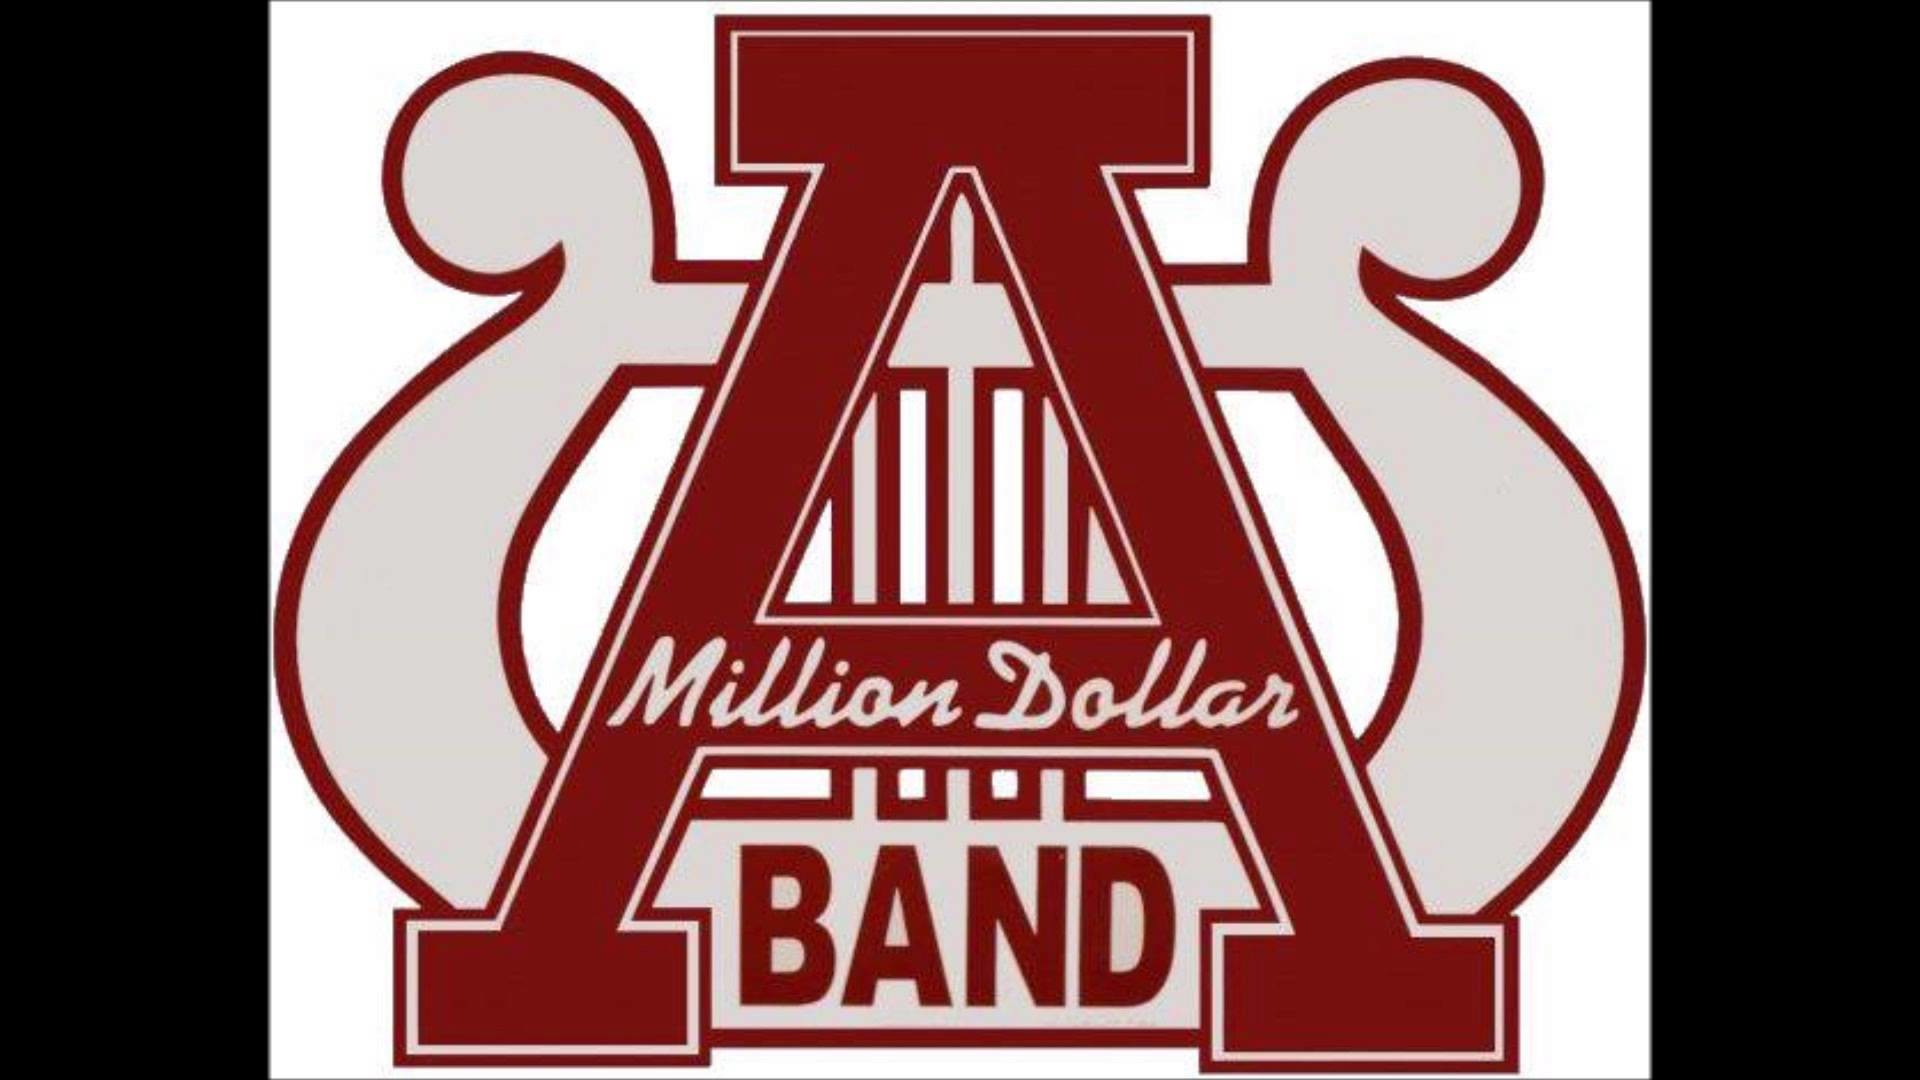 1920x1080 Million Dollar Band Cheer "Go Bama Go" University of Alabama Crimson Tide.  Digital Recording - YouTube